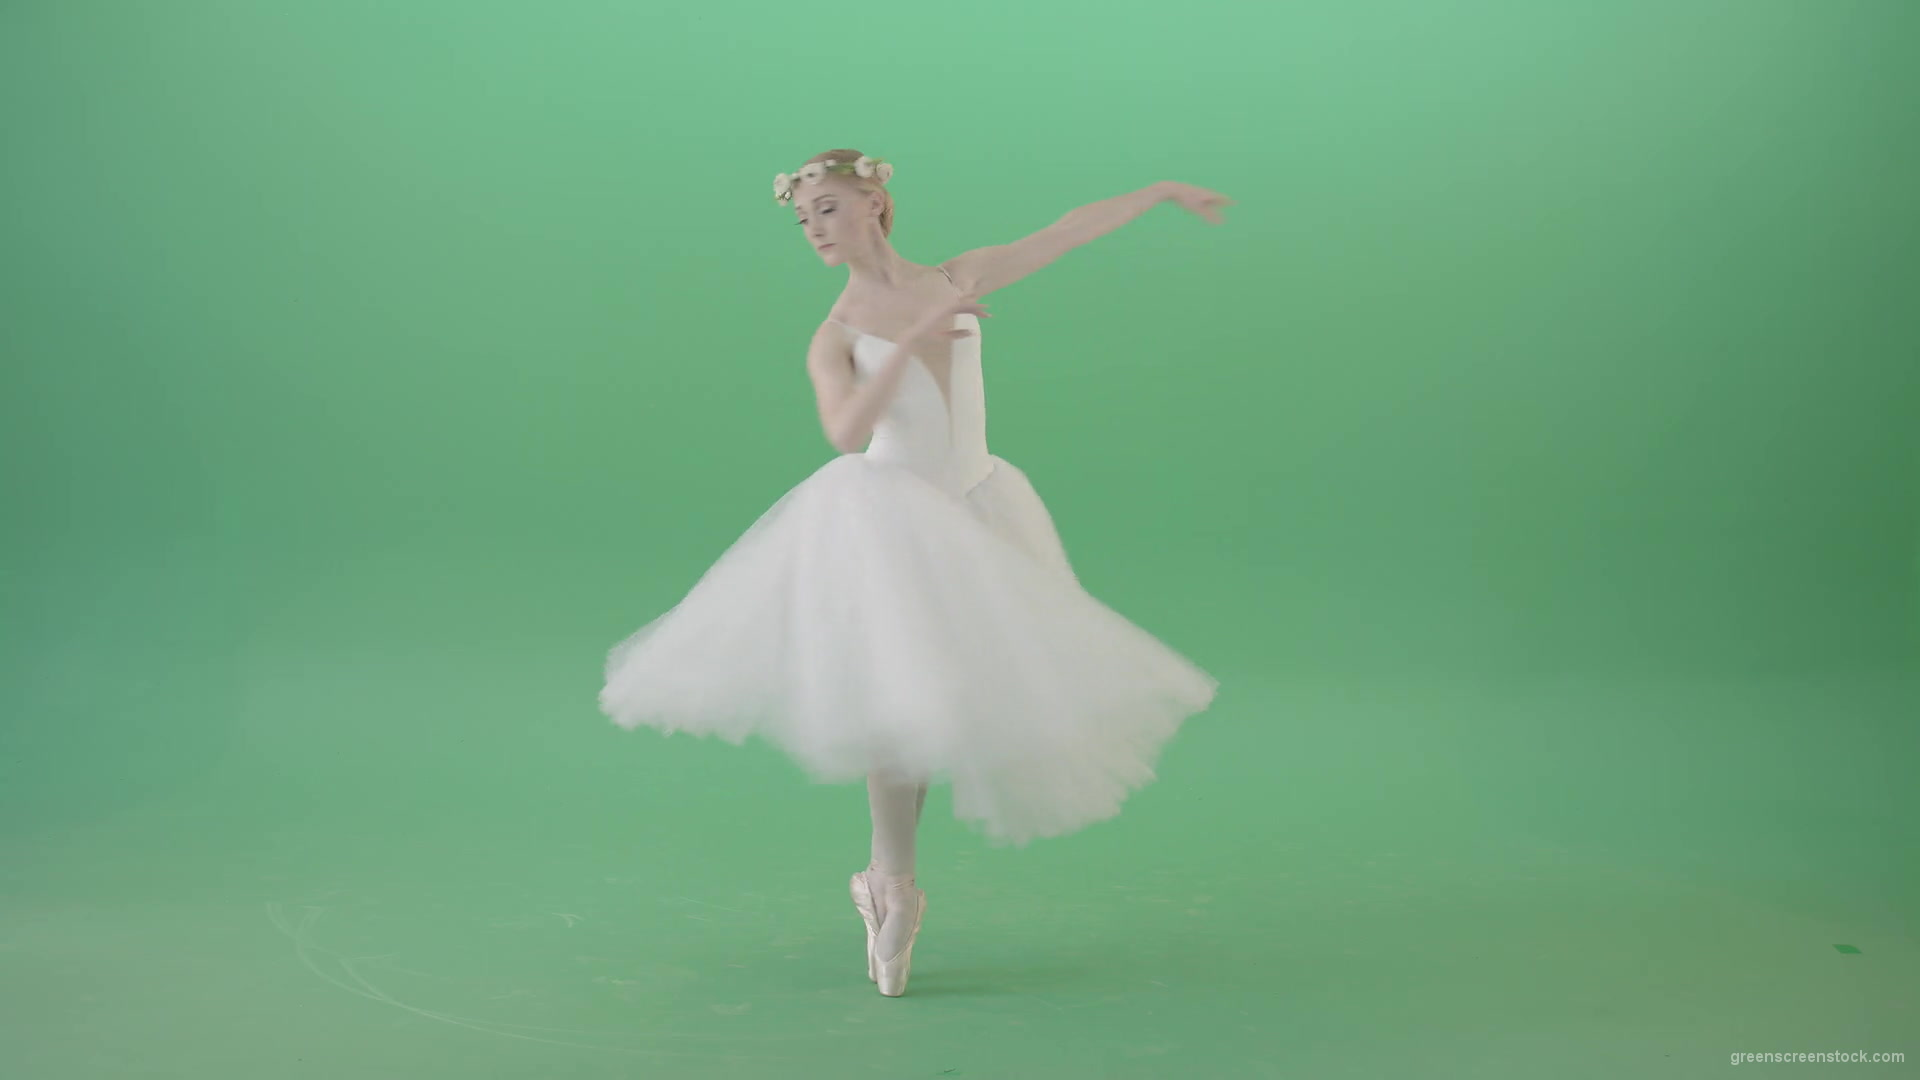 Ballerina-in-elegance-white-wedding-dress-spinning-in-dance-on-green-screen-4K-Video-Footage-1920_006 Green Screen Stock